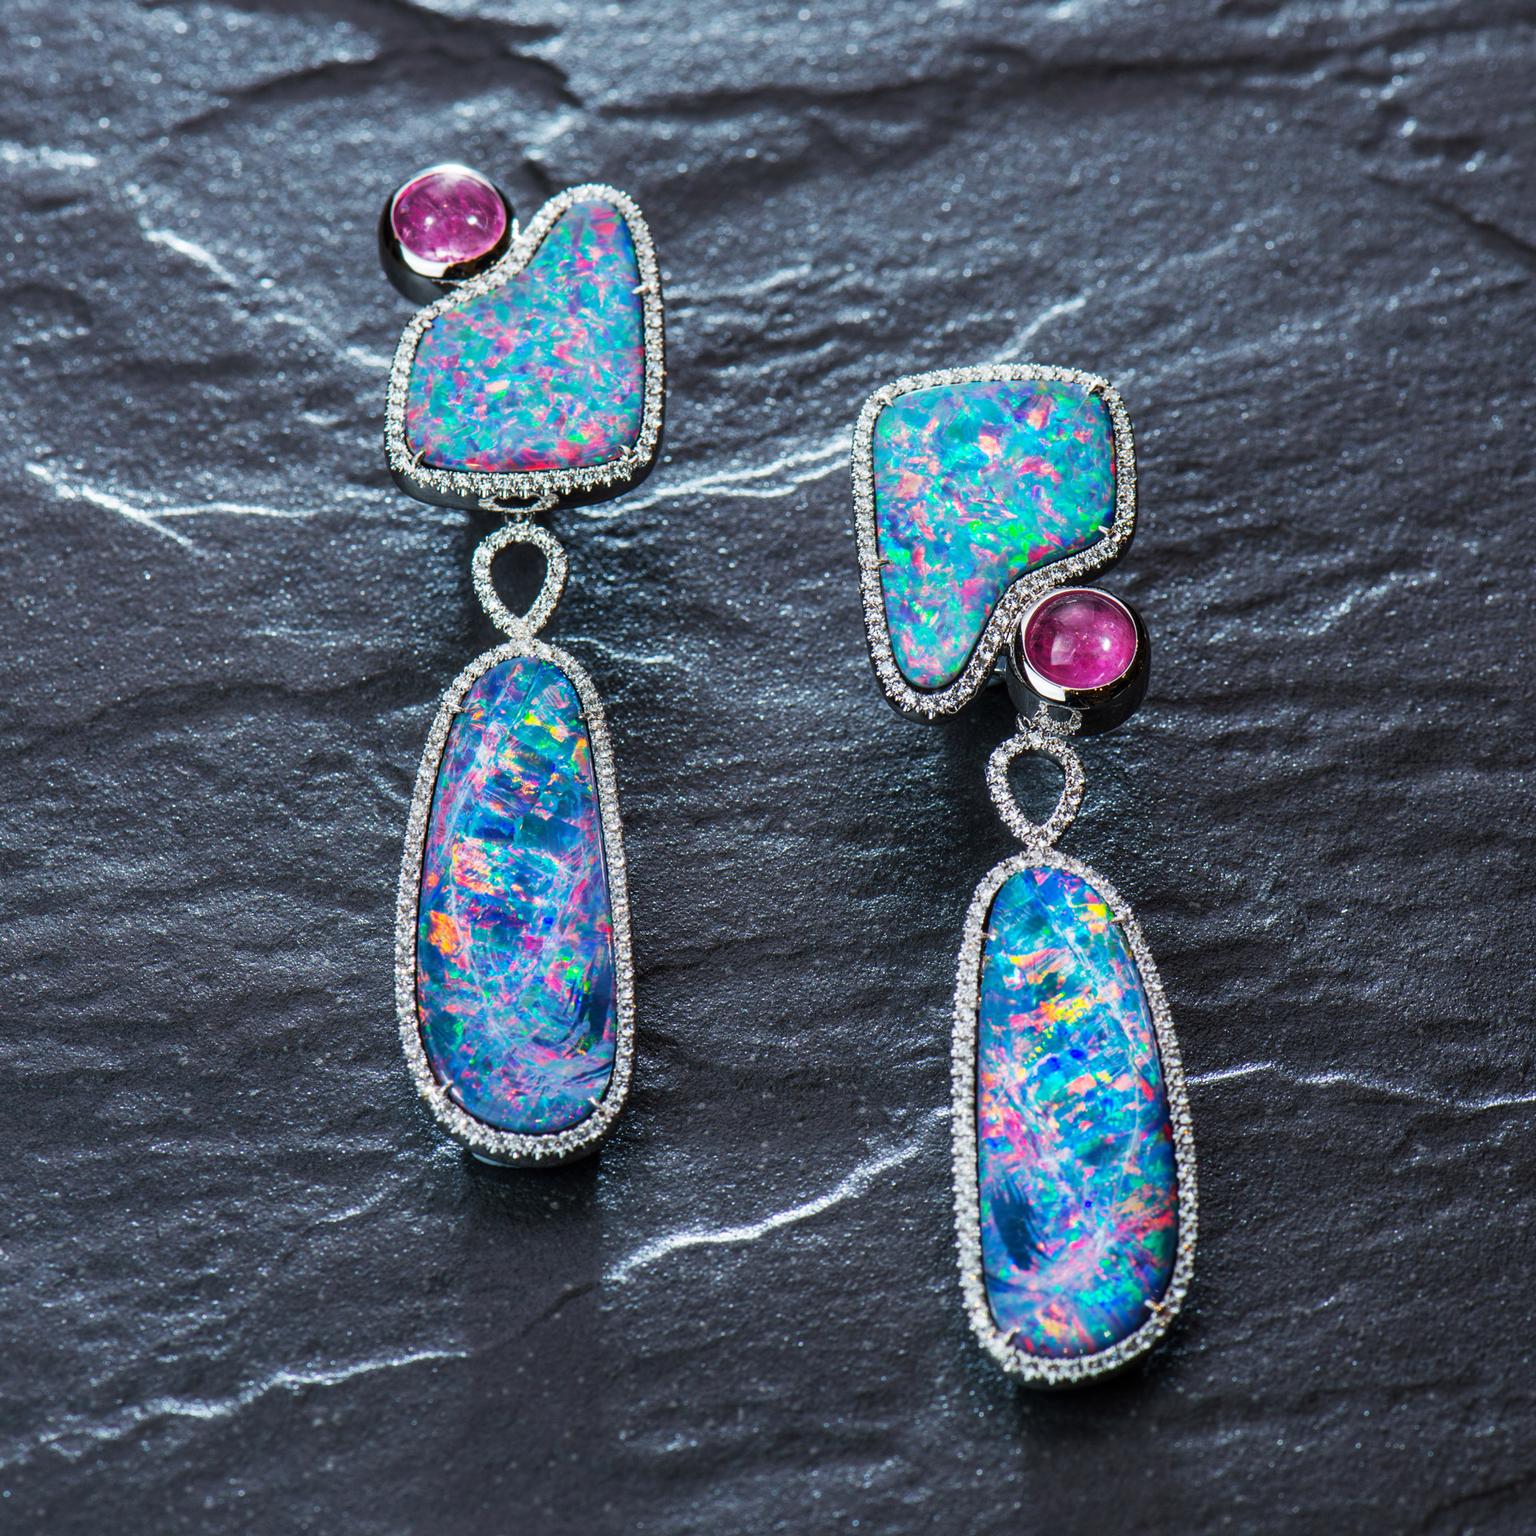 Tayma Bushfire opal earrings with diamonds and rubellites